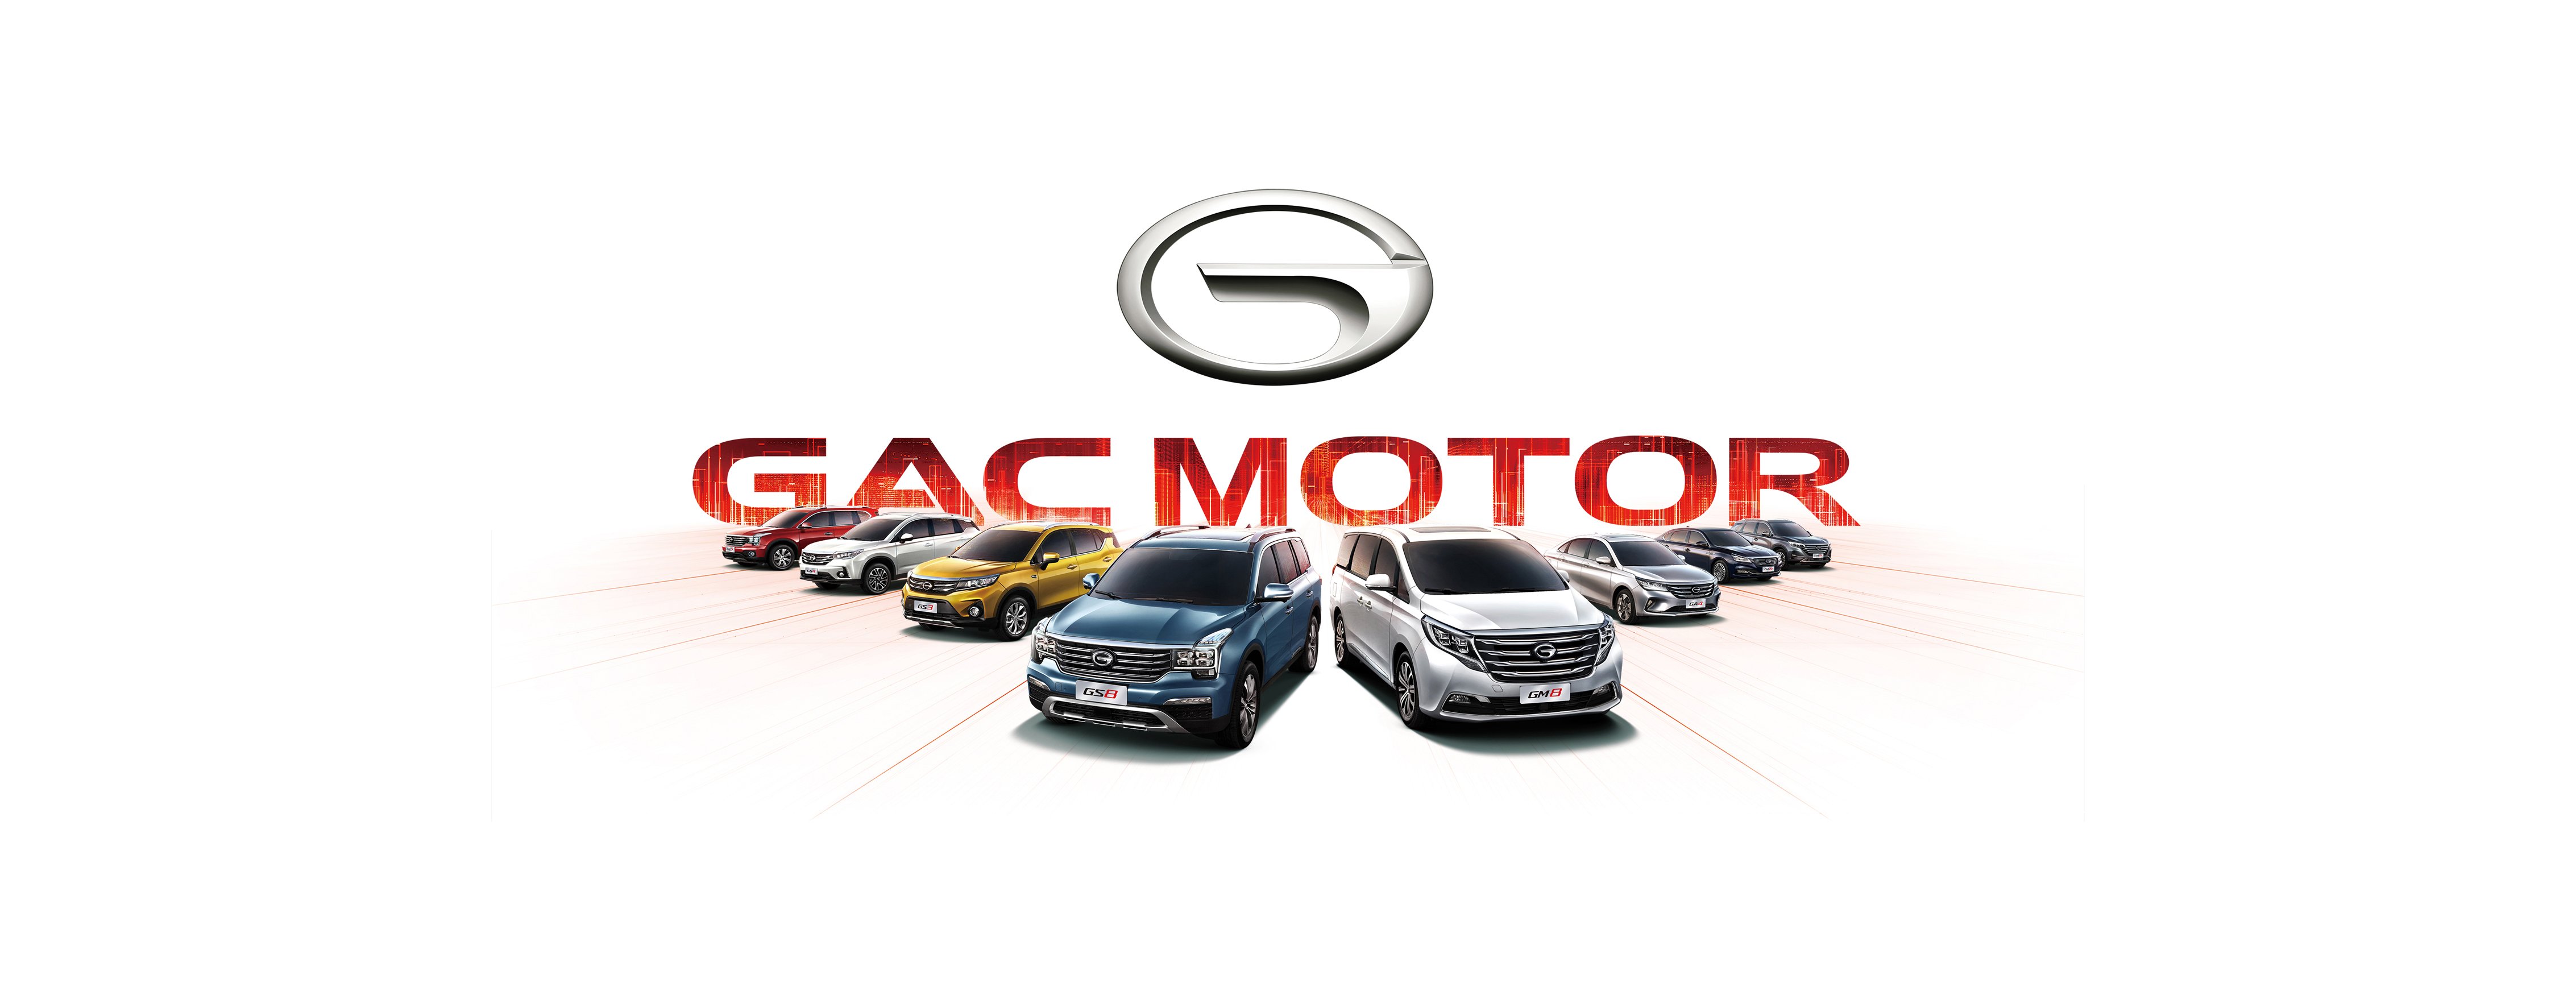 GAC motors logo and GAC different cars model